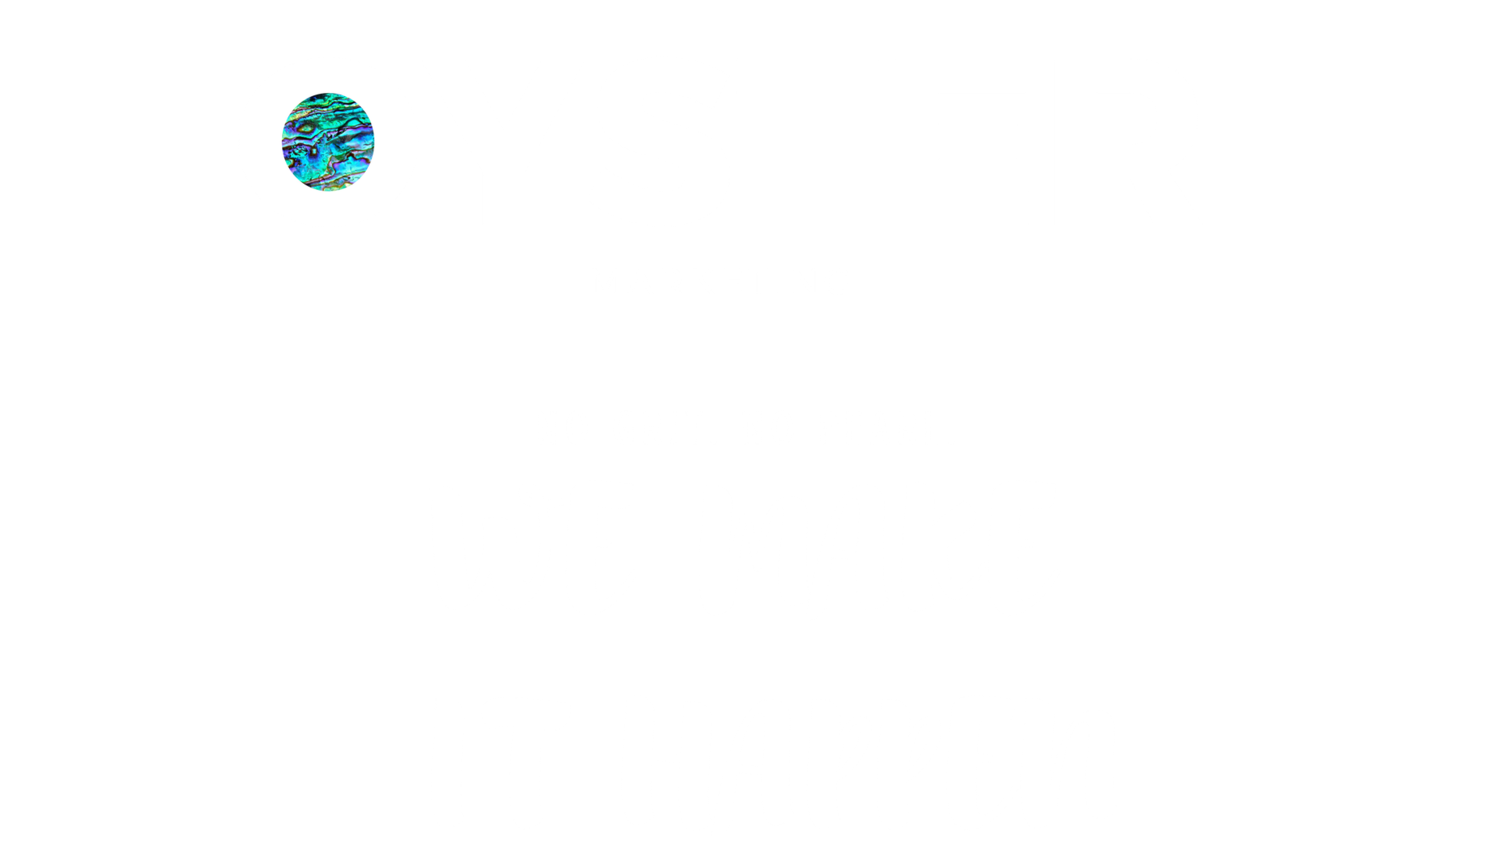 OYSTER Marketing Agency